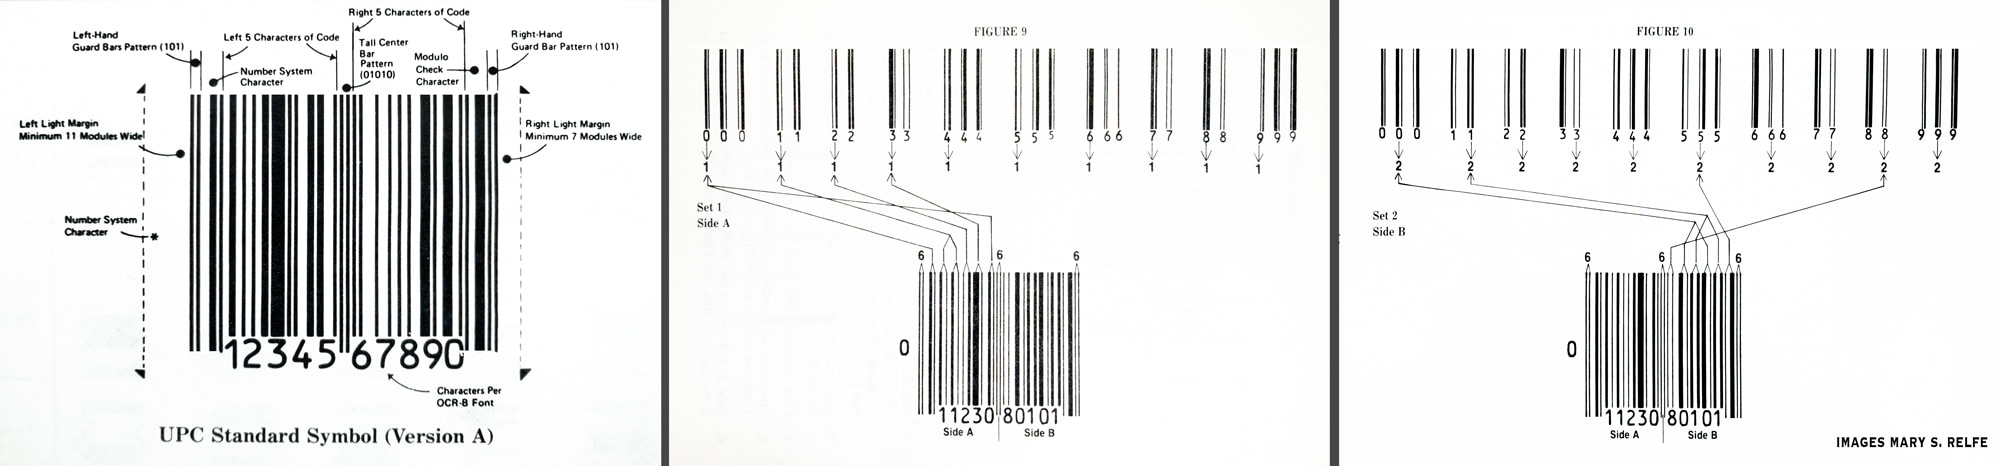 UPC barcode breakdown